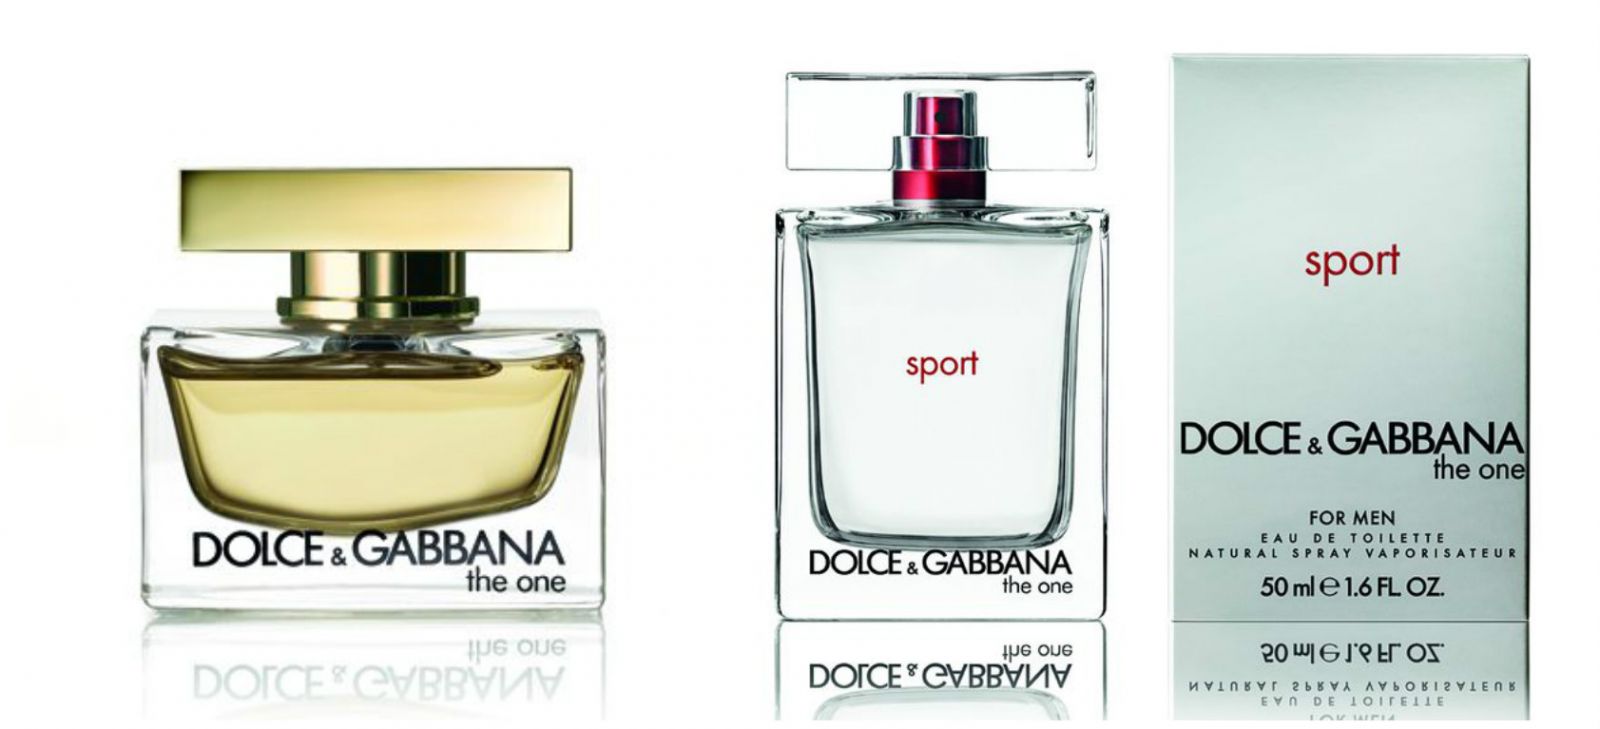 Ароматы Dolce&Gabbana The One и The One Sport фото